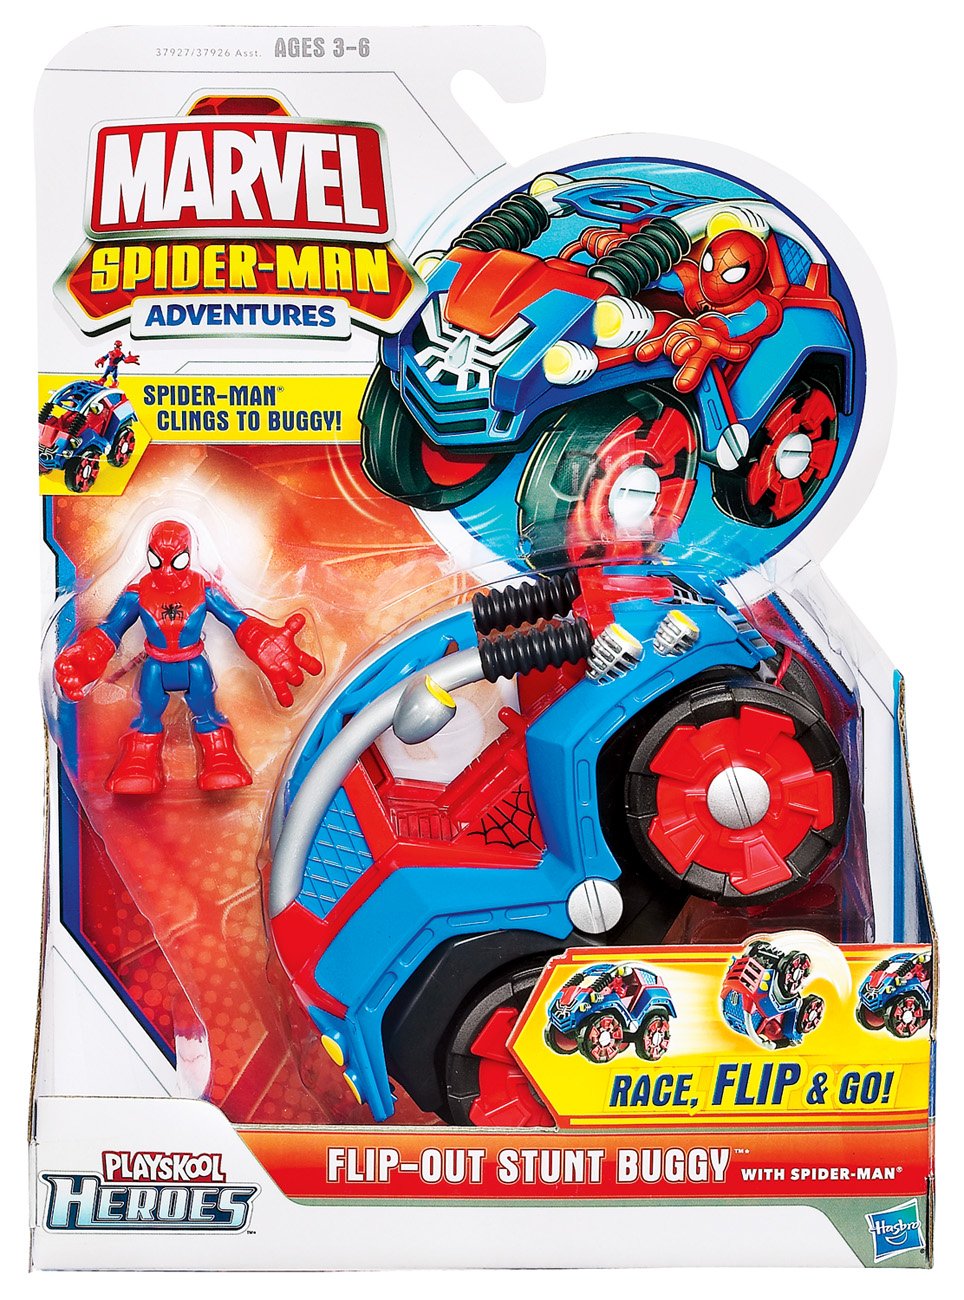 Stunt buggy Details about   Marvel spiderman adventures Playskool heroes. imaginext 